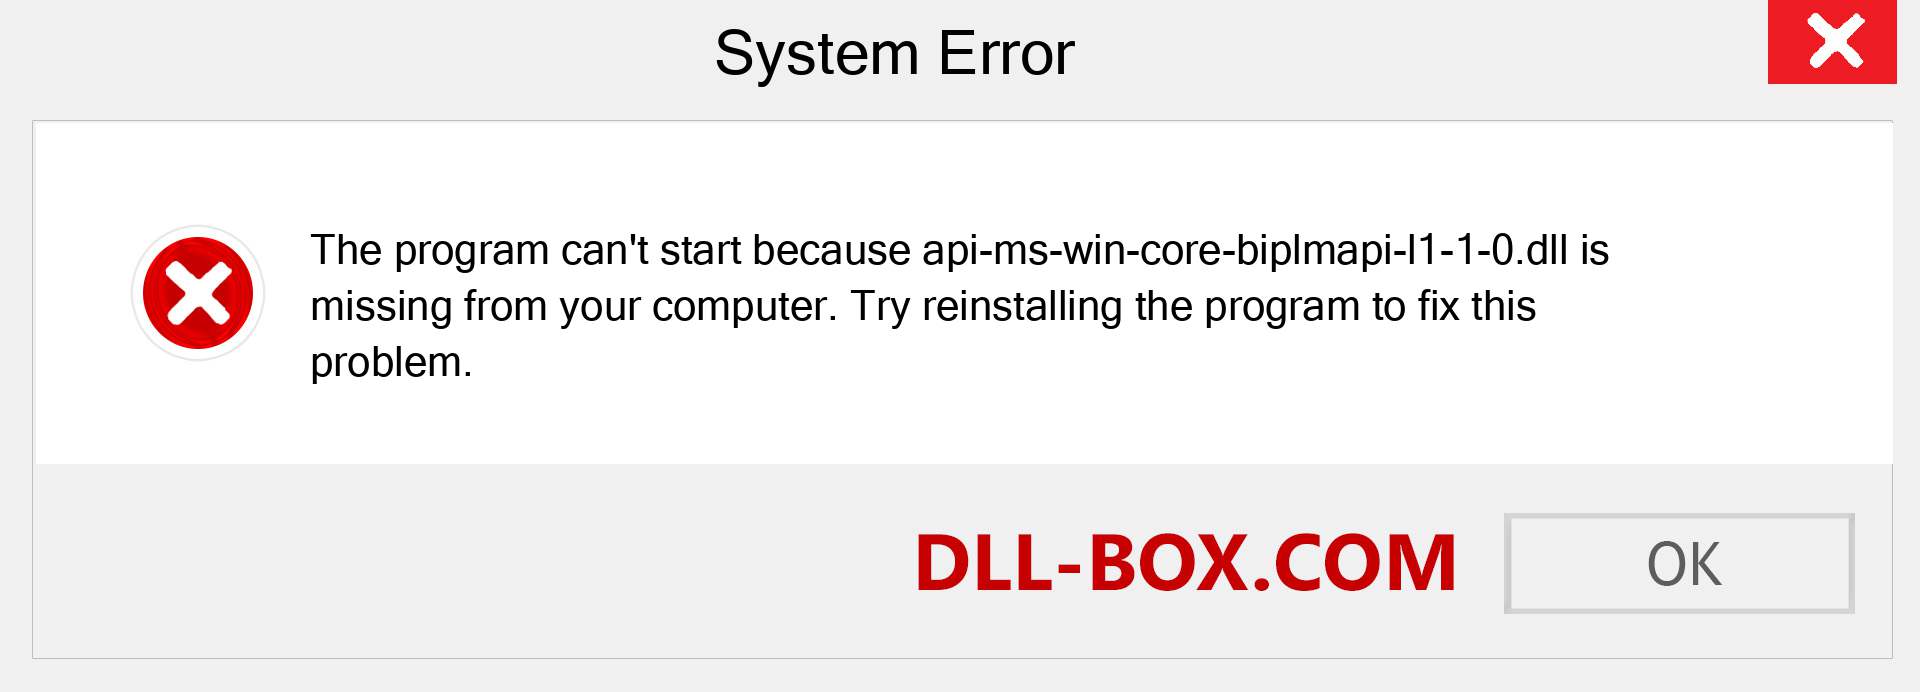  api-ms-win-core-biplmapi-l1-1-0.dll file is missing?. Download for Windows 7, 8, 10 - Fix  api-ms-win-core-biplmapi-l1-1-0 dll Missing Error on Windows, photos, images